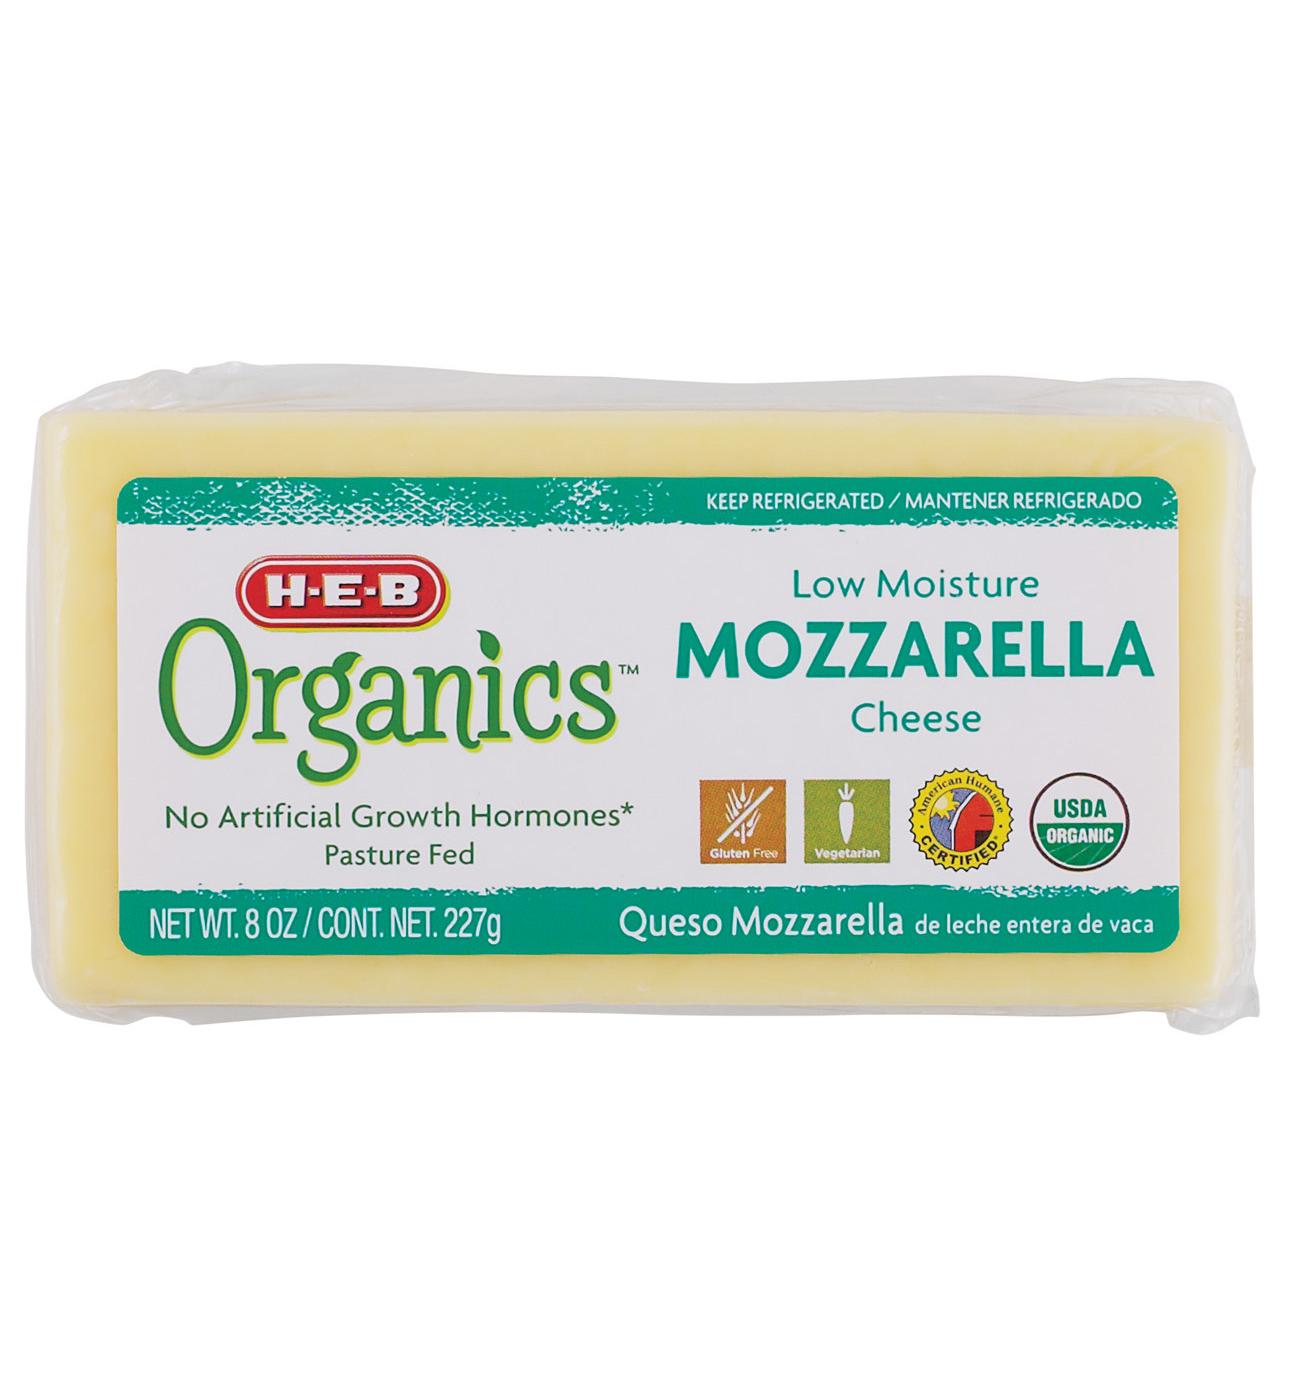 H-E-B Organics Low Moisture Mozzarella Cheese; image 1 of 2